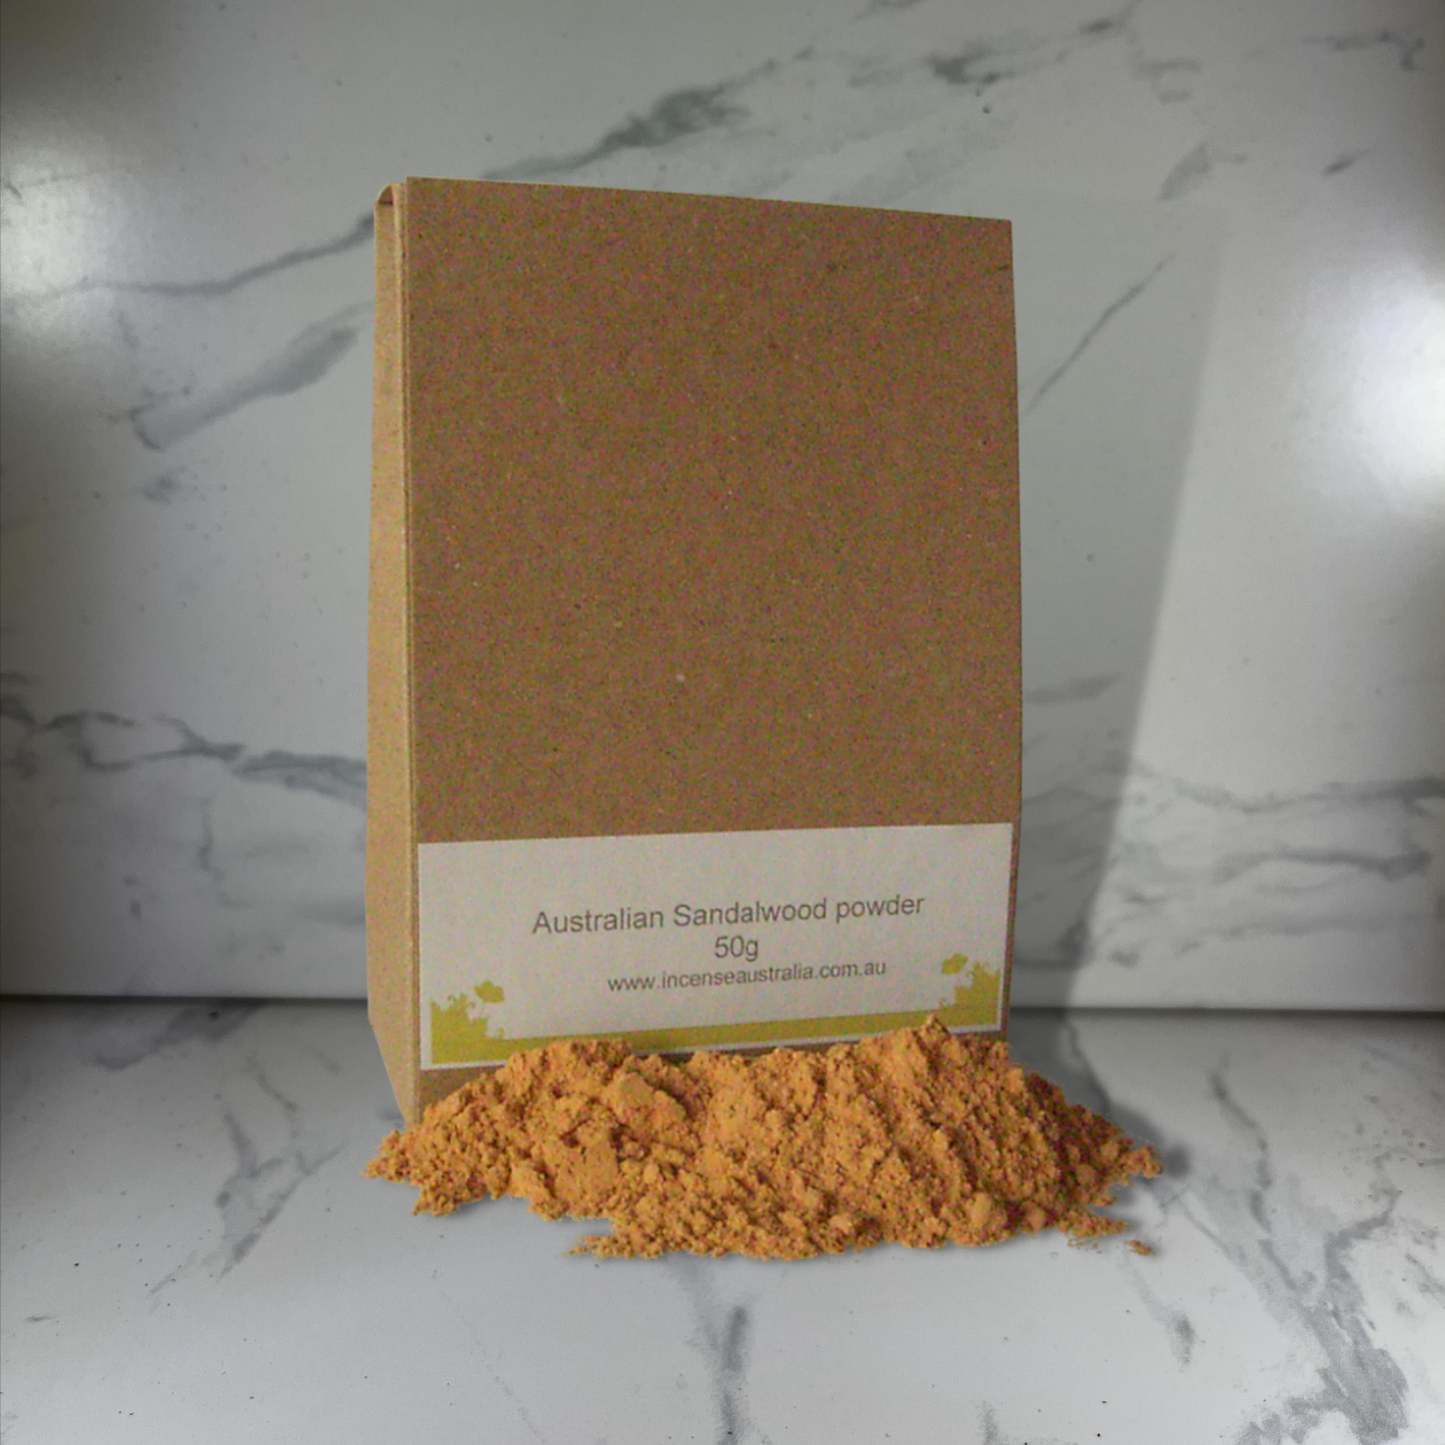 Australian Sandalwood powder